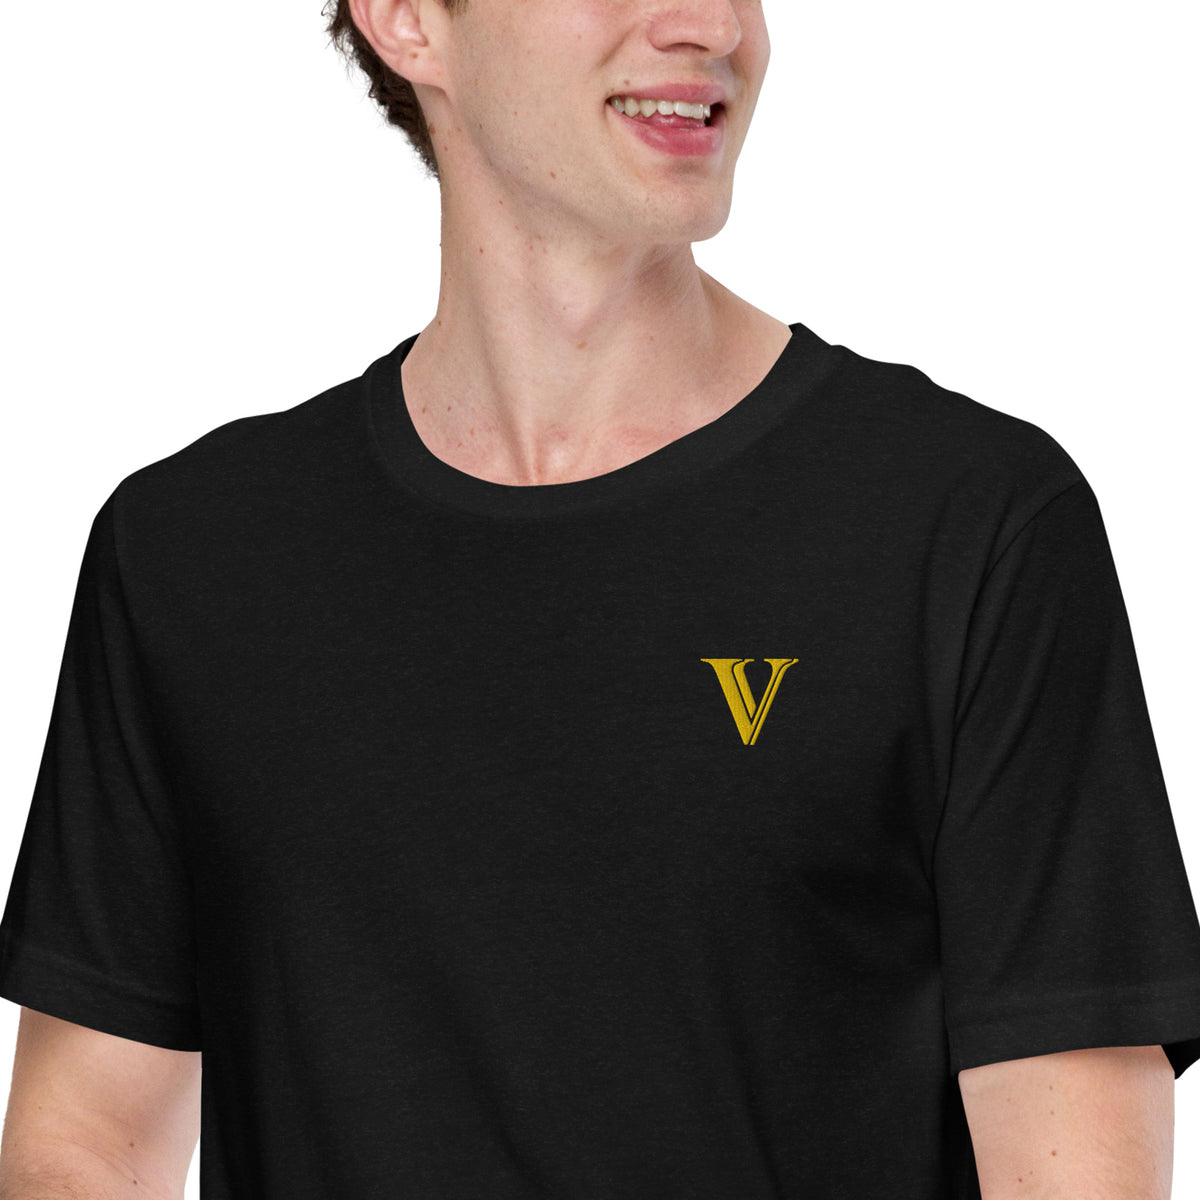 VV Embroidered T-Shirt (Black/Gold)